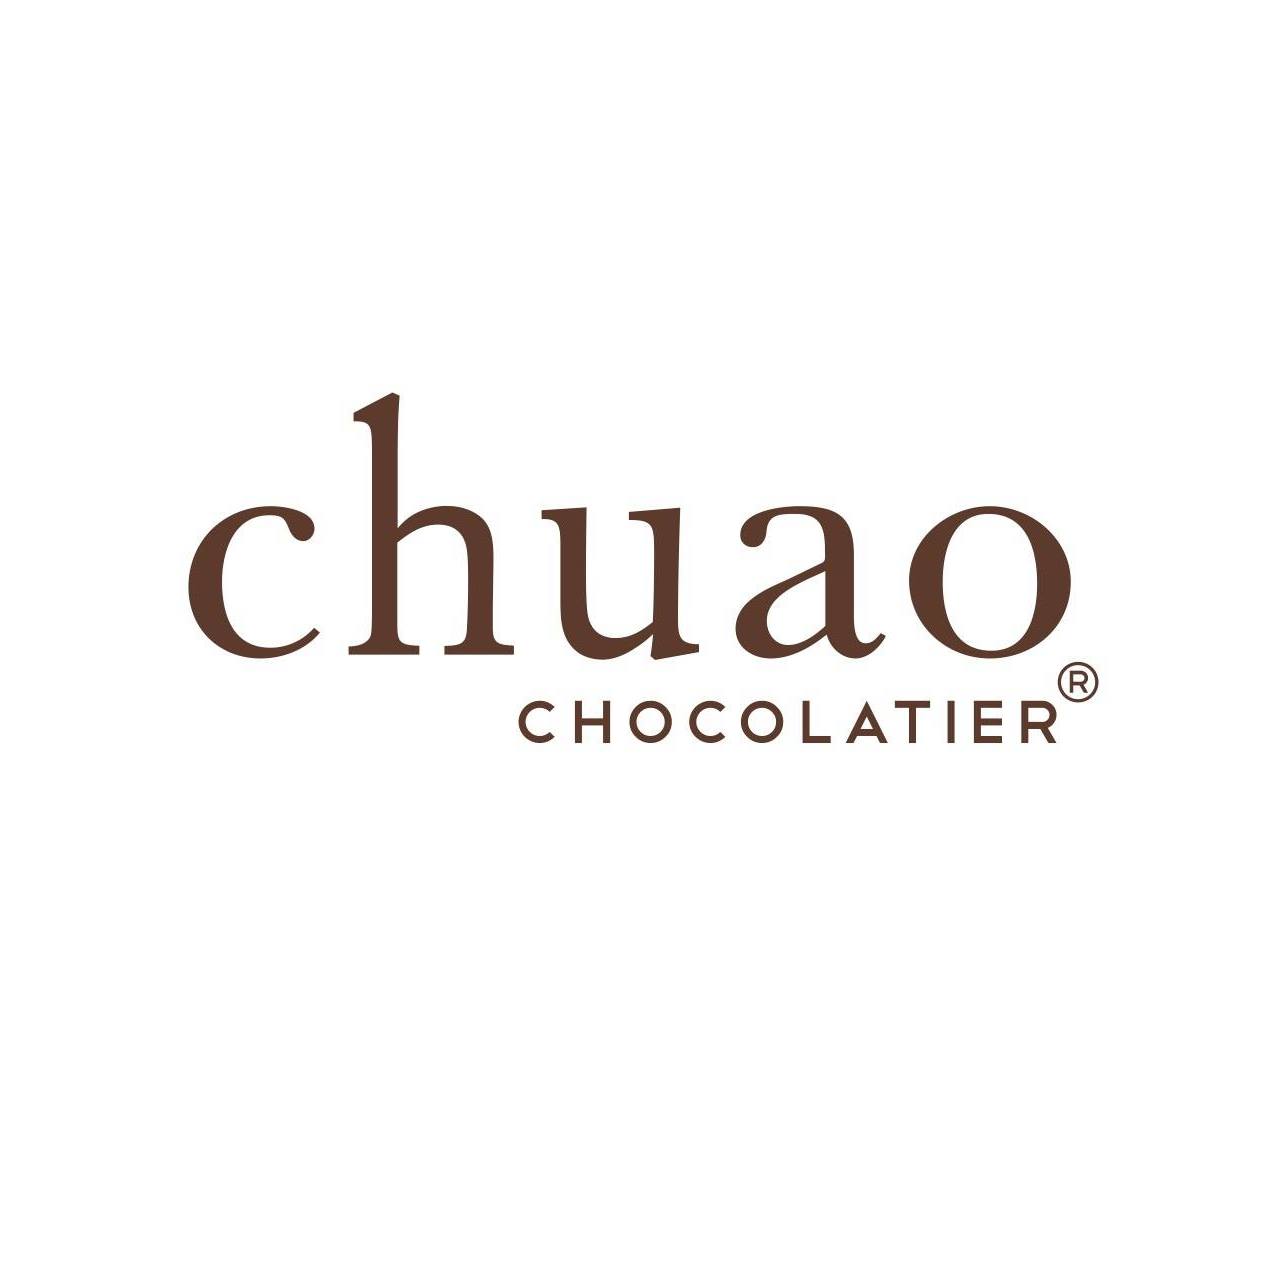 Chuao Chocolatier